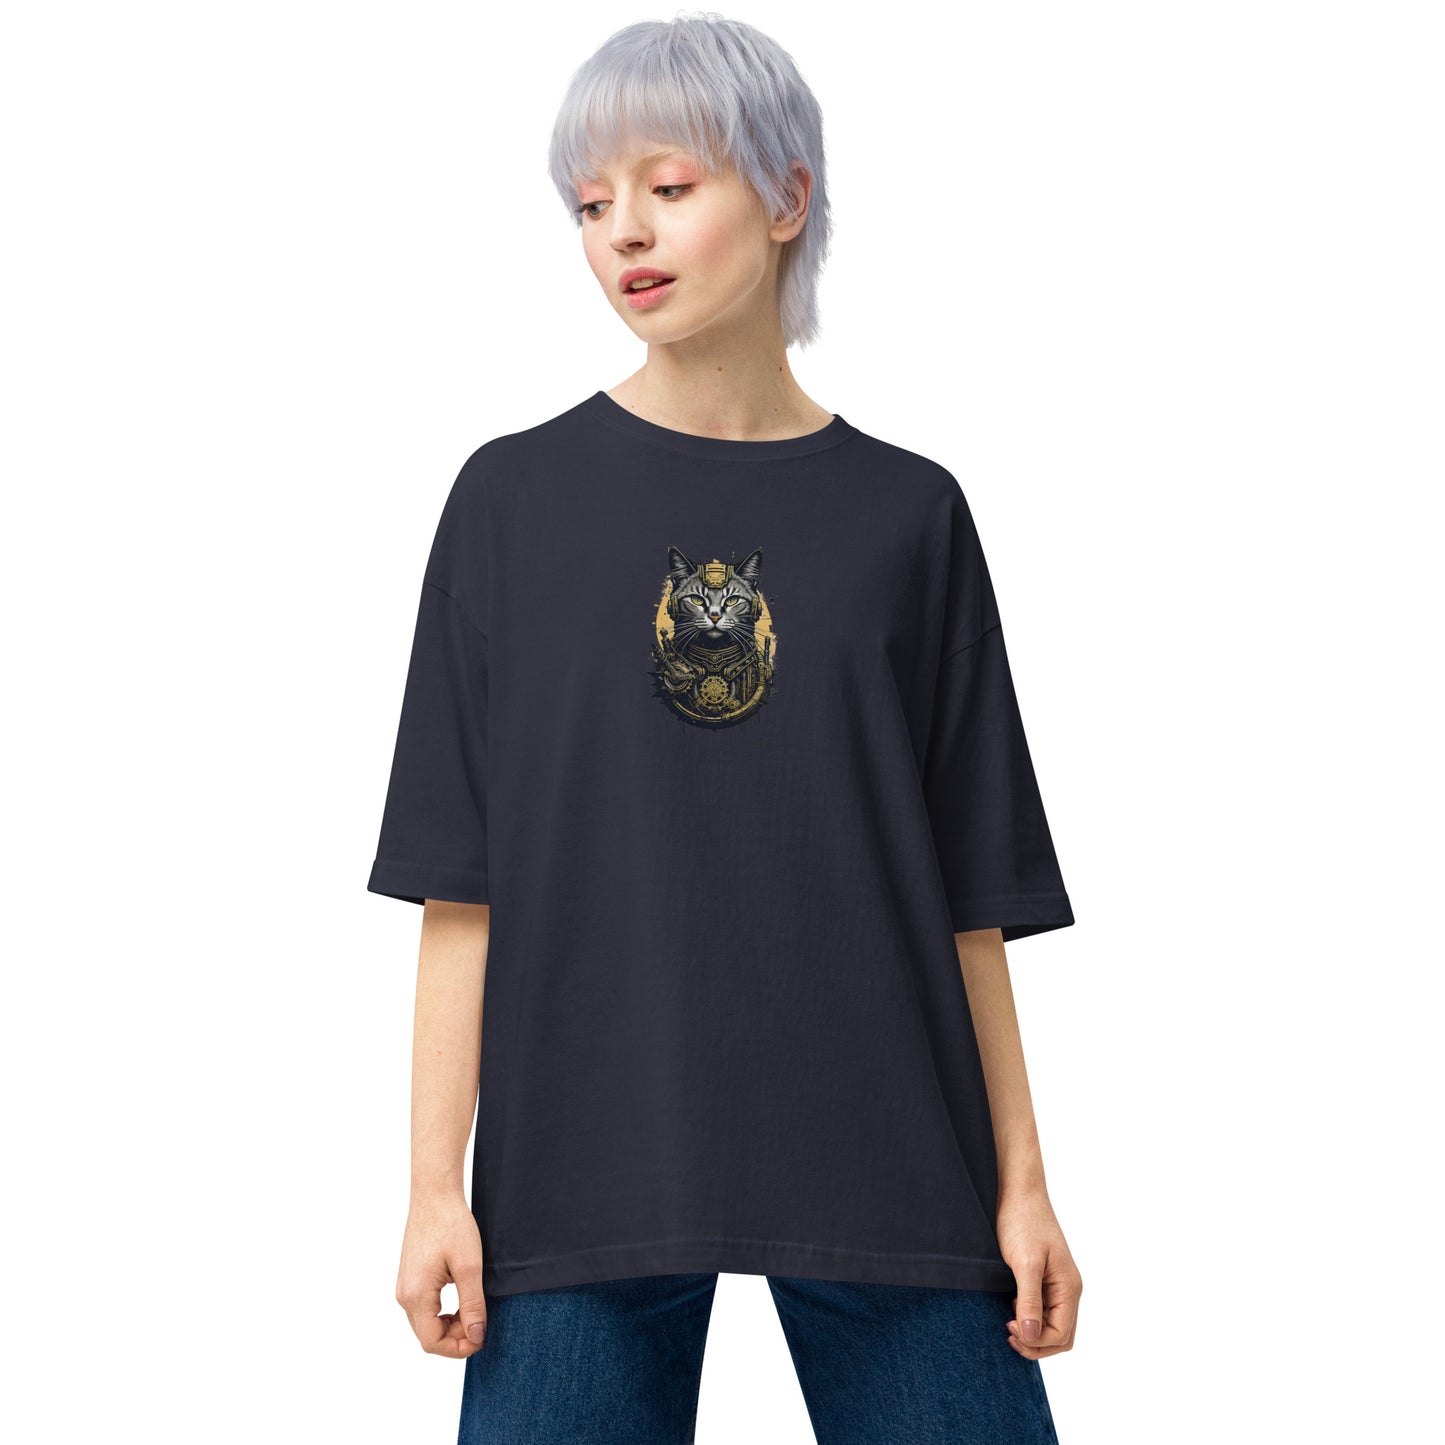 Steampunk Cat Unisex oversized t-shirt